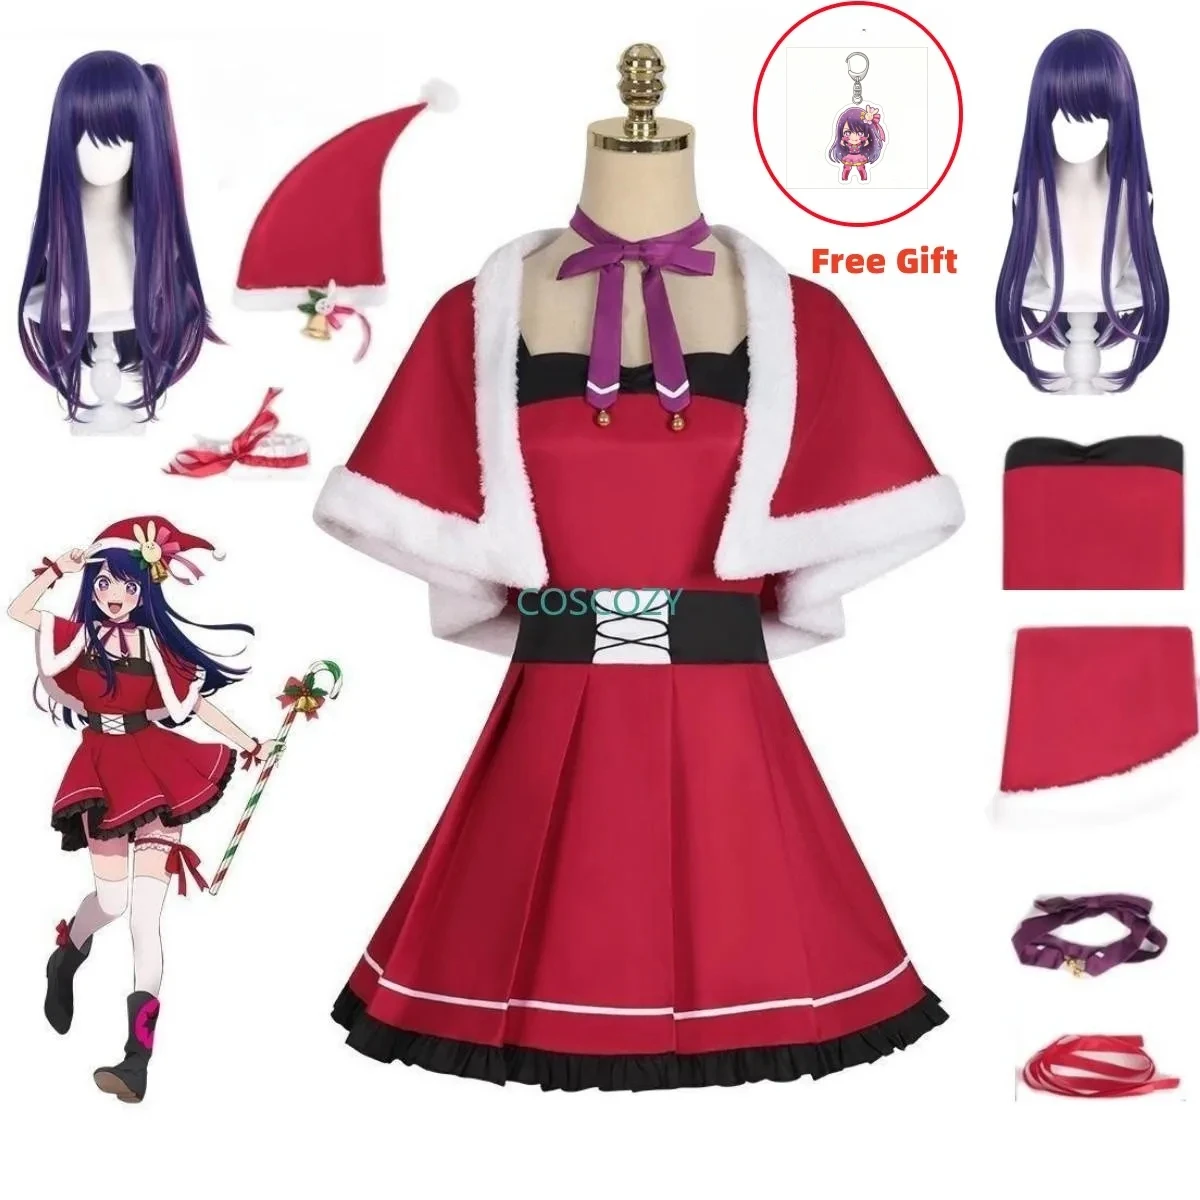 

Oshi No Ko Ai Hoshino Christmas Cosplay Costume Lolita Red Dress Xmas Costume For Woman Role Play Party Anime Hat Legwear Outfit